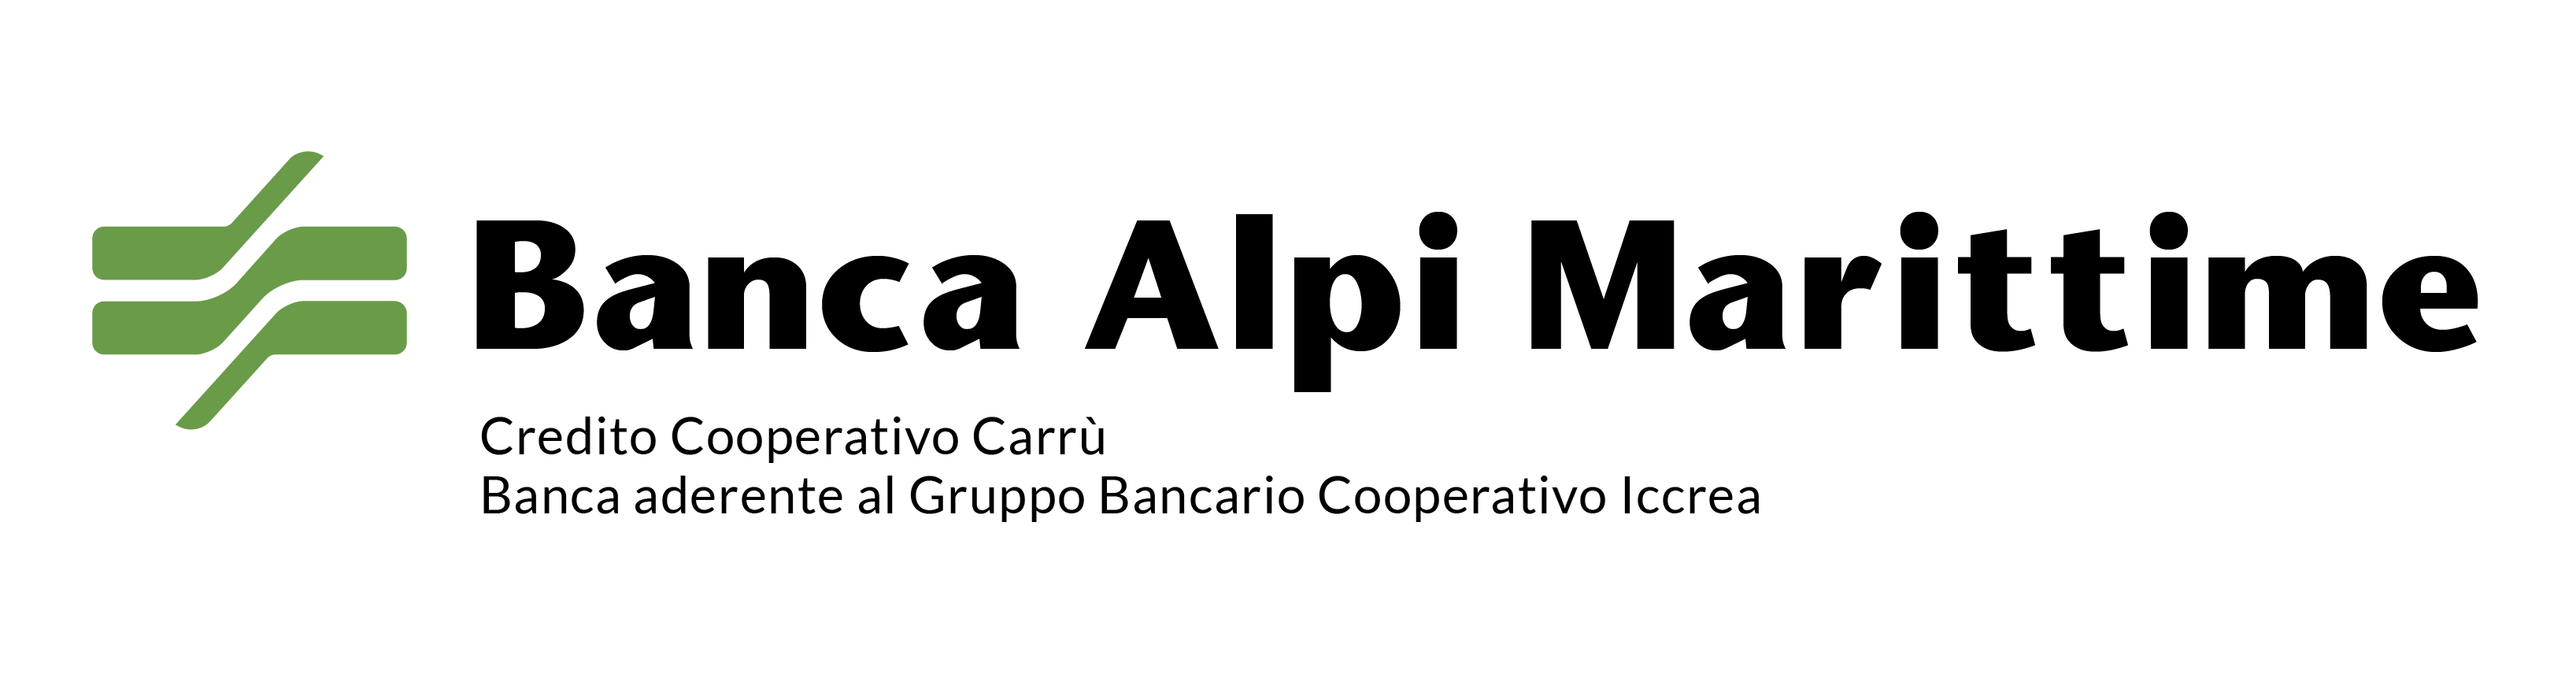 Banca Alpi Marittime Credito Cooperativo Carrù S.c.p.A. | IBM